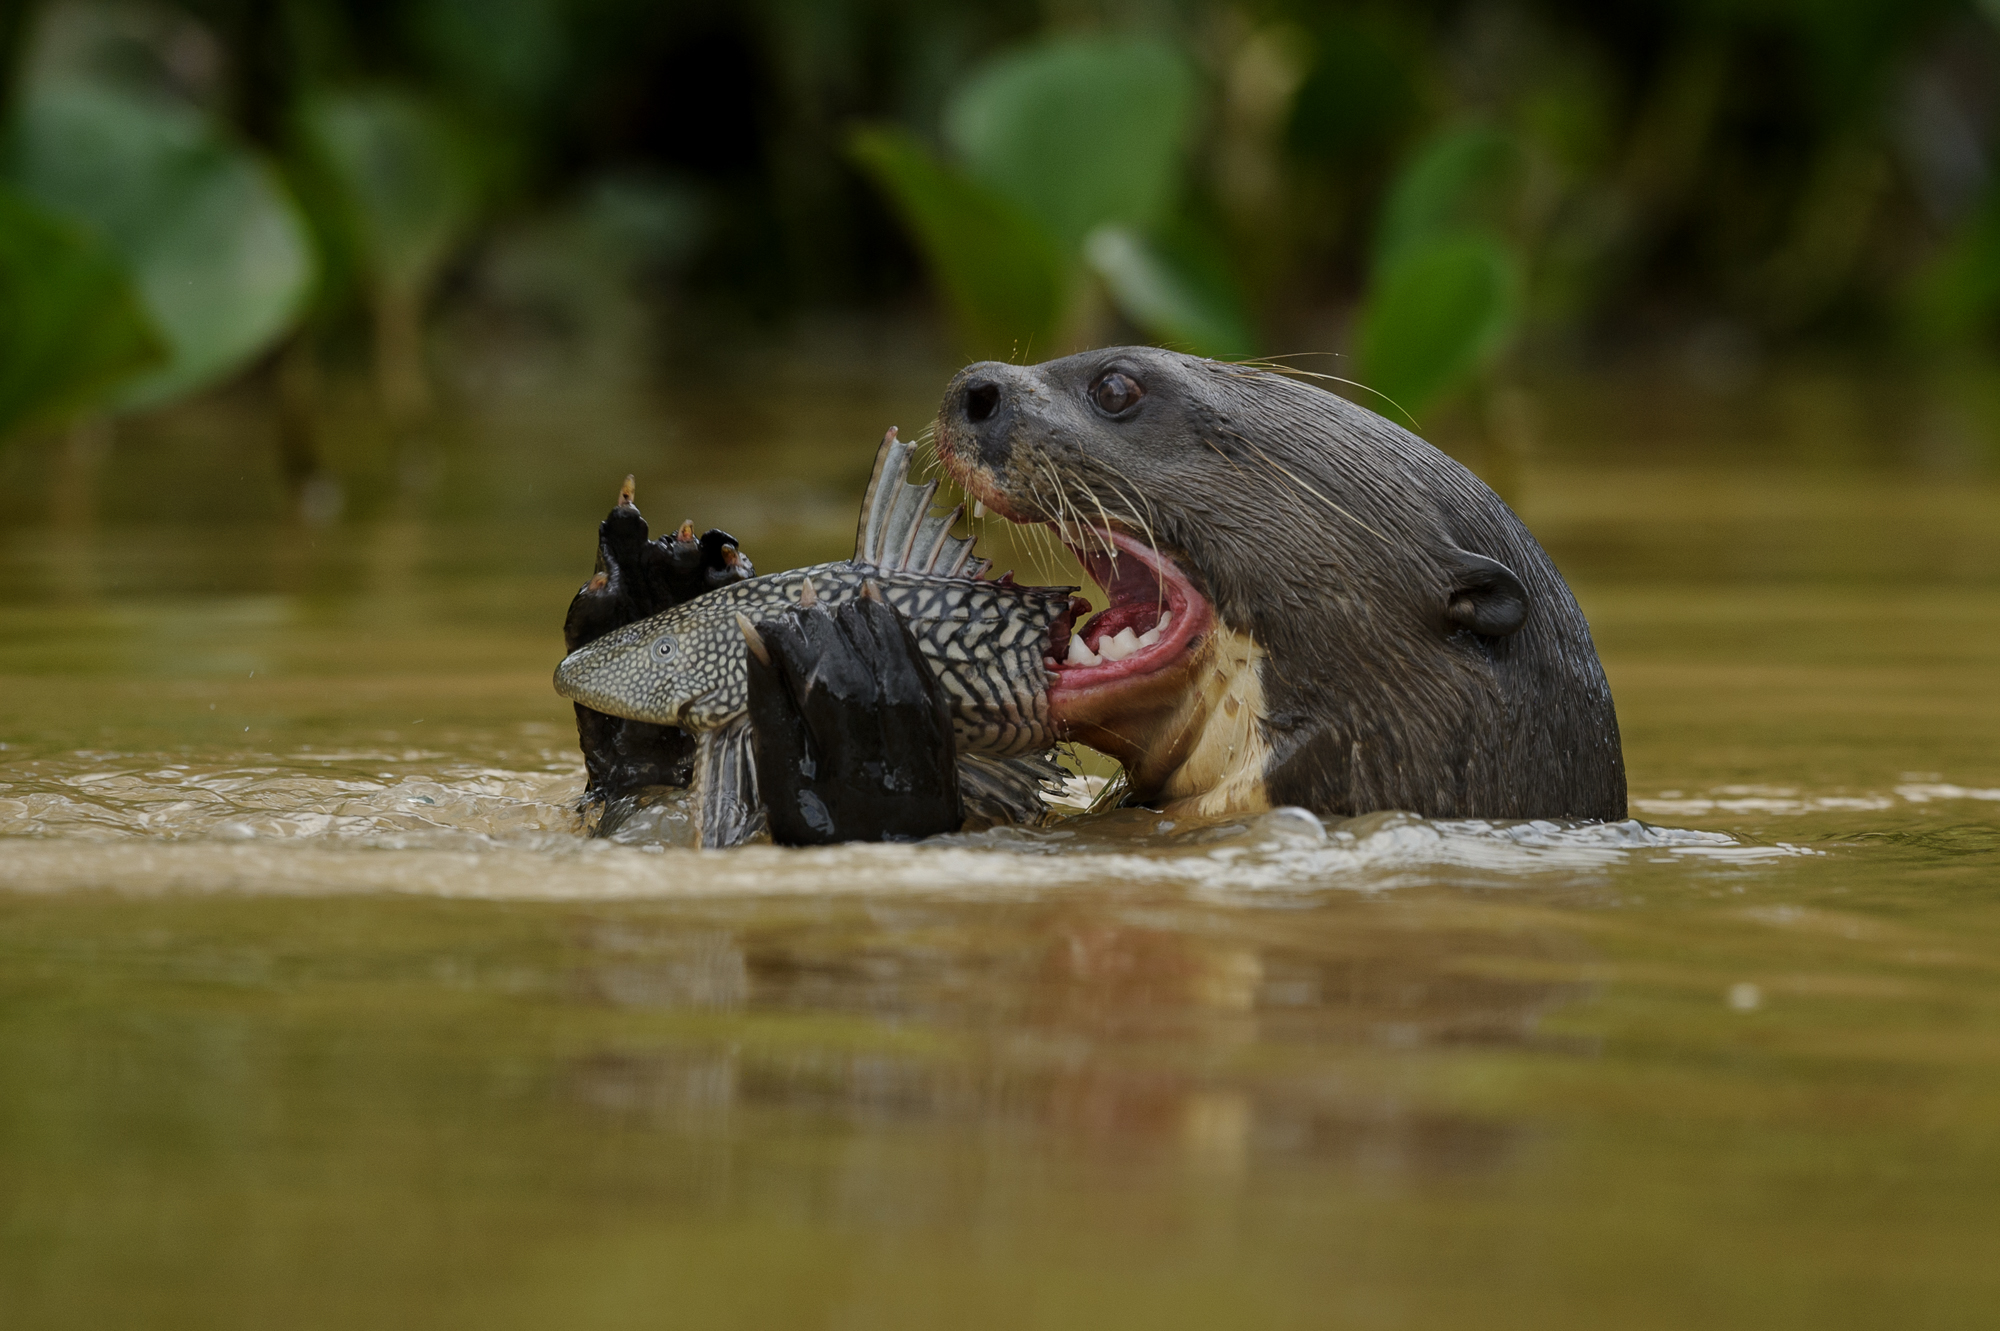 Pantanal, Brasilien - jaguarer, jätteuttrar och aror. Fotoresa med Wild Nature fotoresor. Foto: Henrik Karlssson